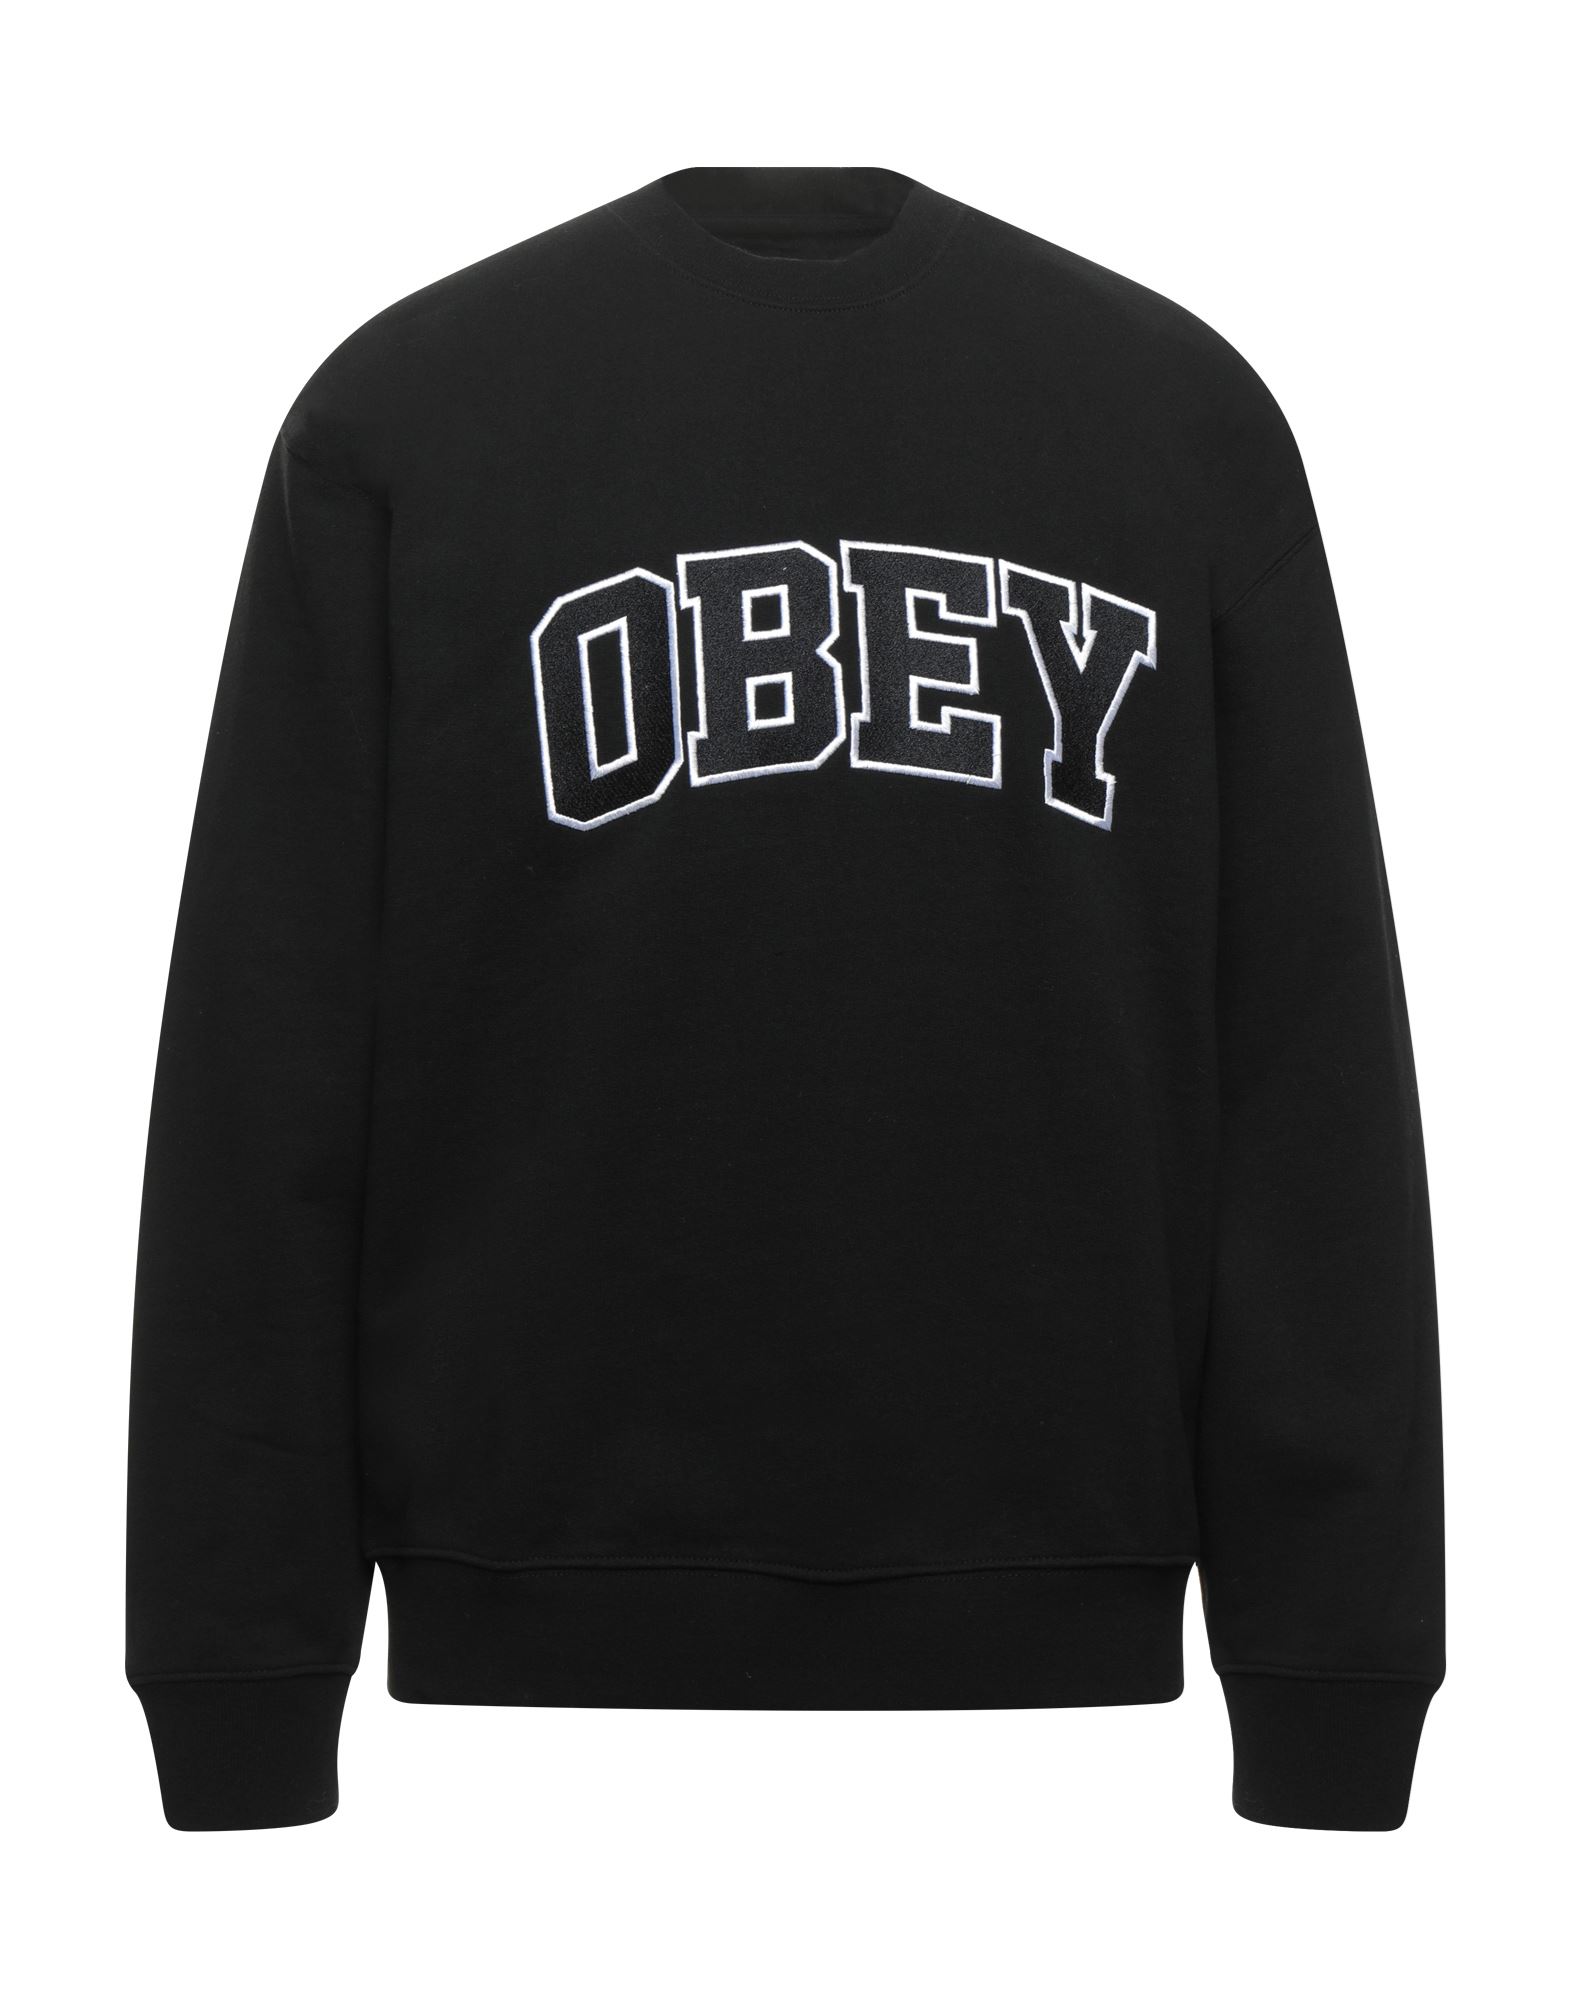 OBEY Sweatshirts for Men | ModeSens